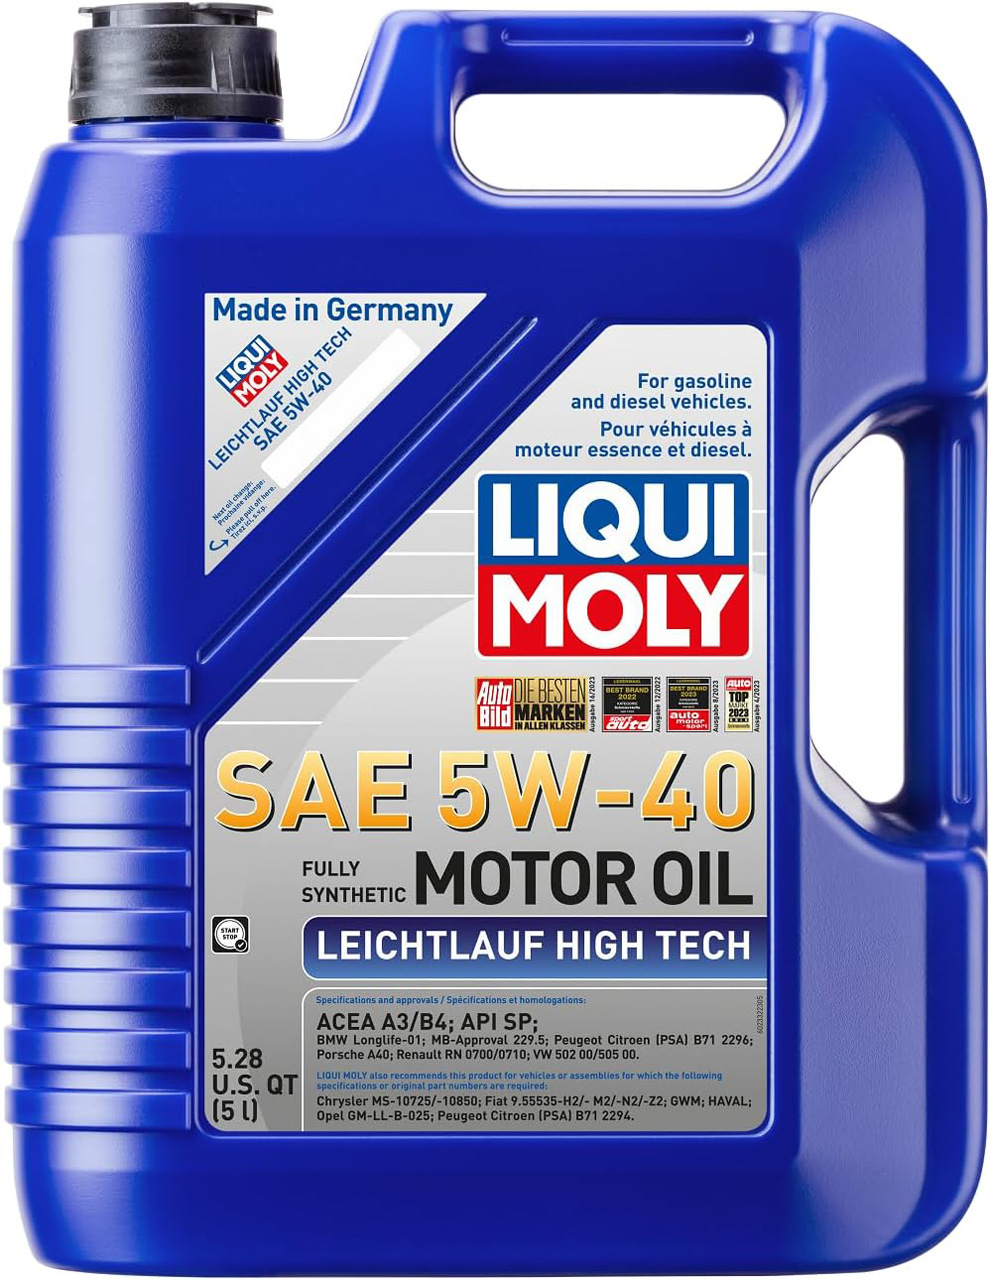 Liqui Moly 2332 Leichtlauf High Tech 5W-40 Engine Oil